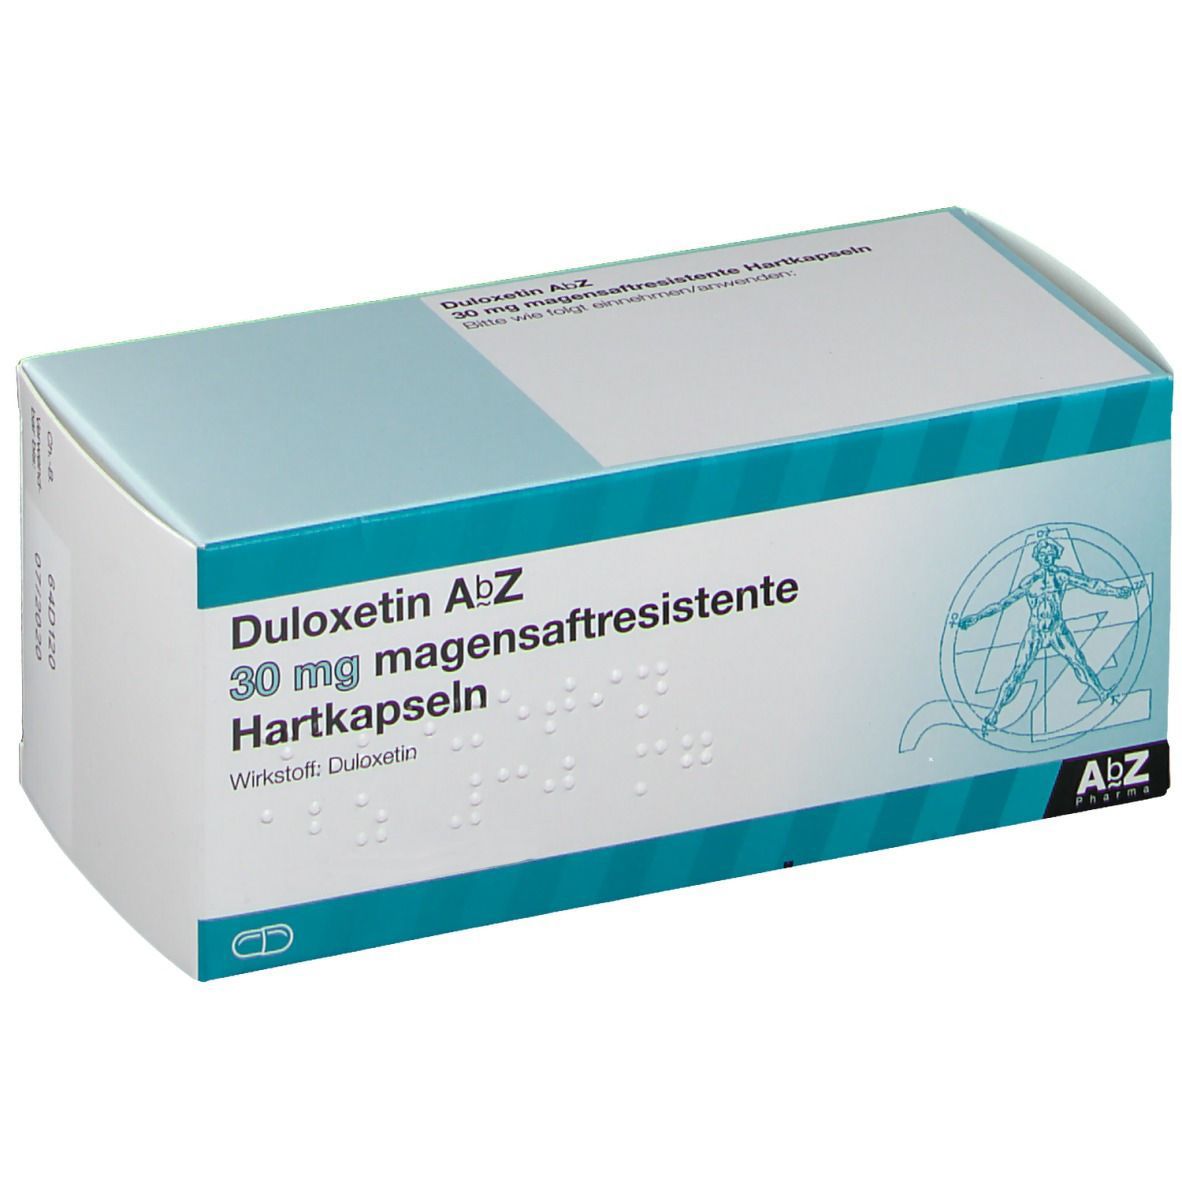 Duloxetin AbZ 30 mg